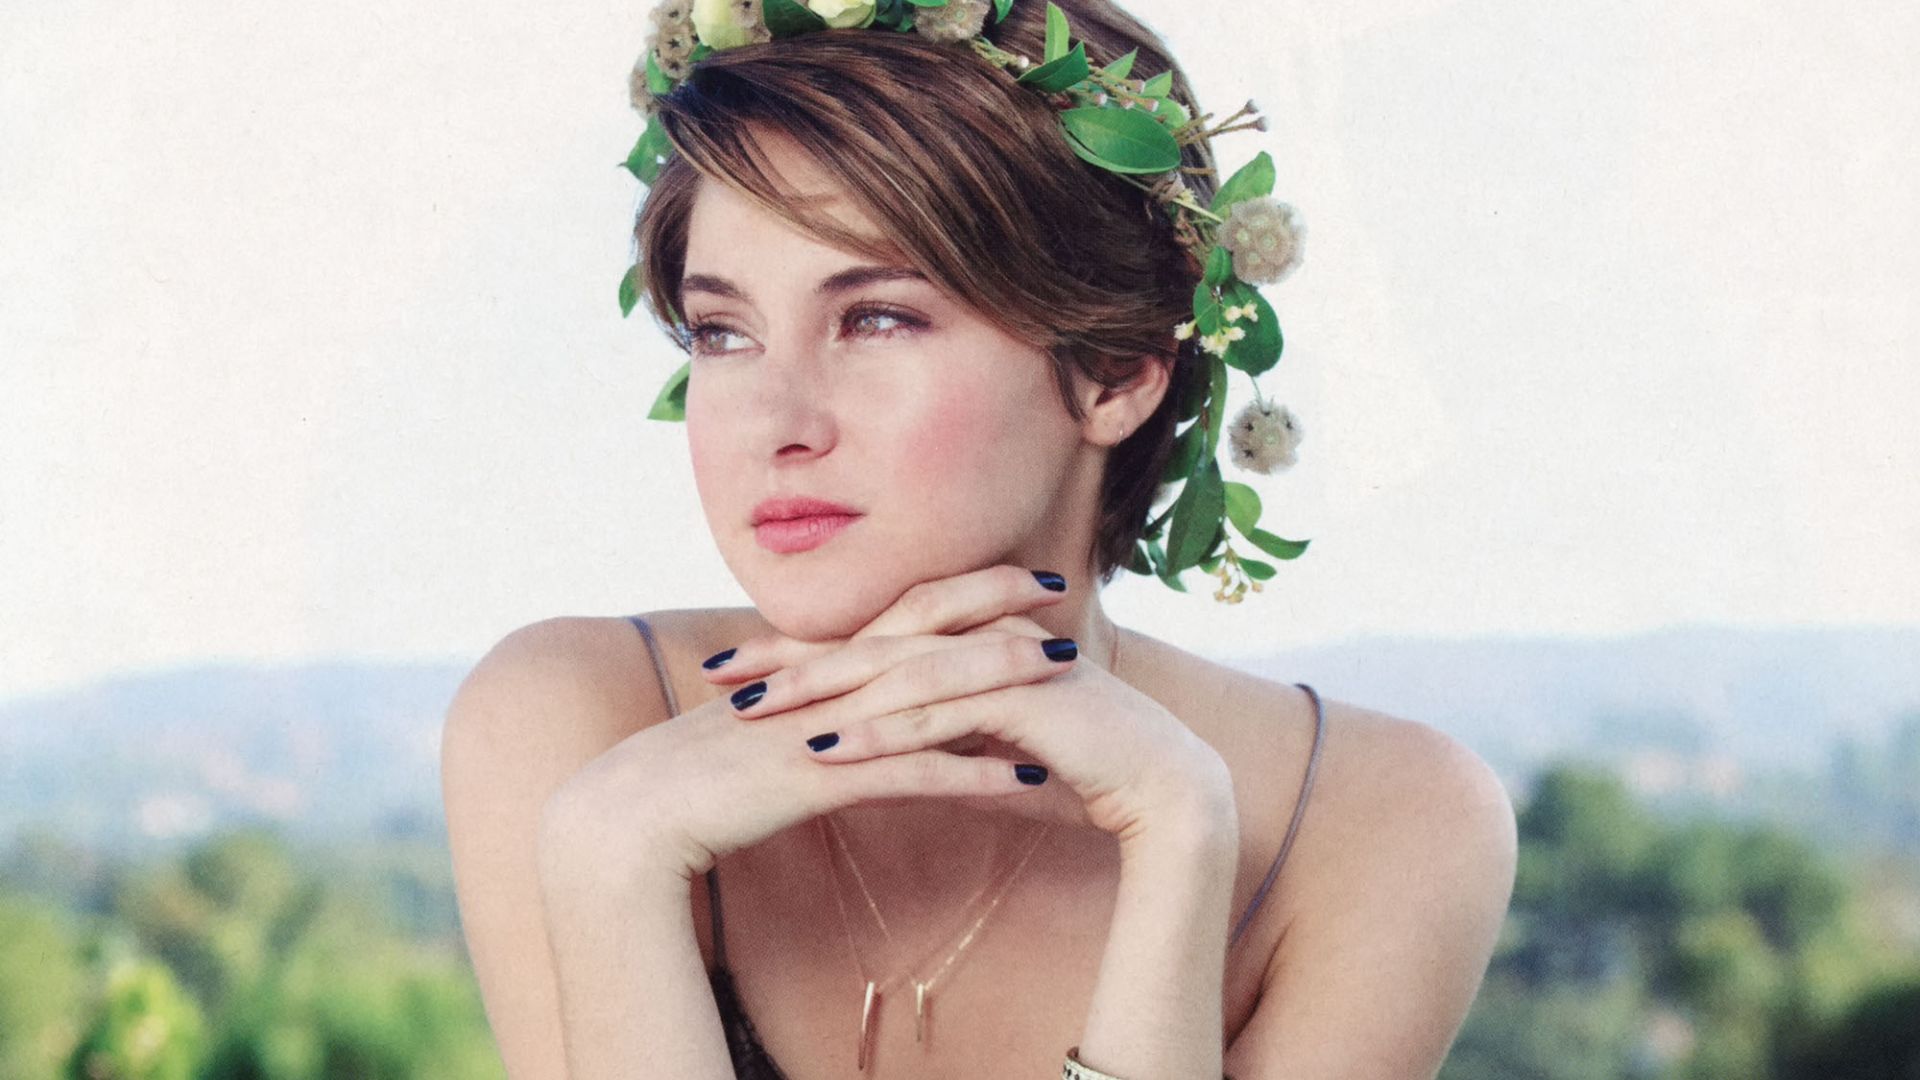 Wallpaper Famous actress, flower crown, Shailene Woodley